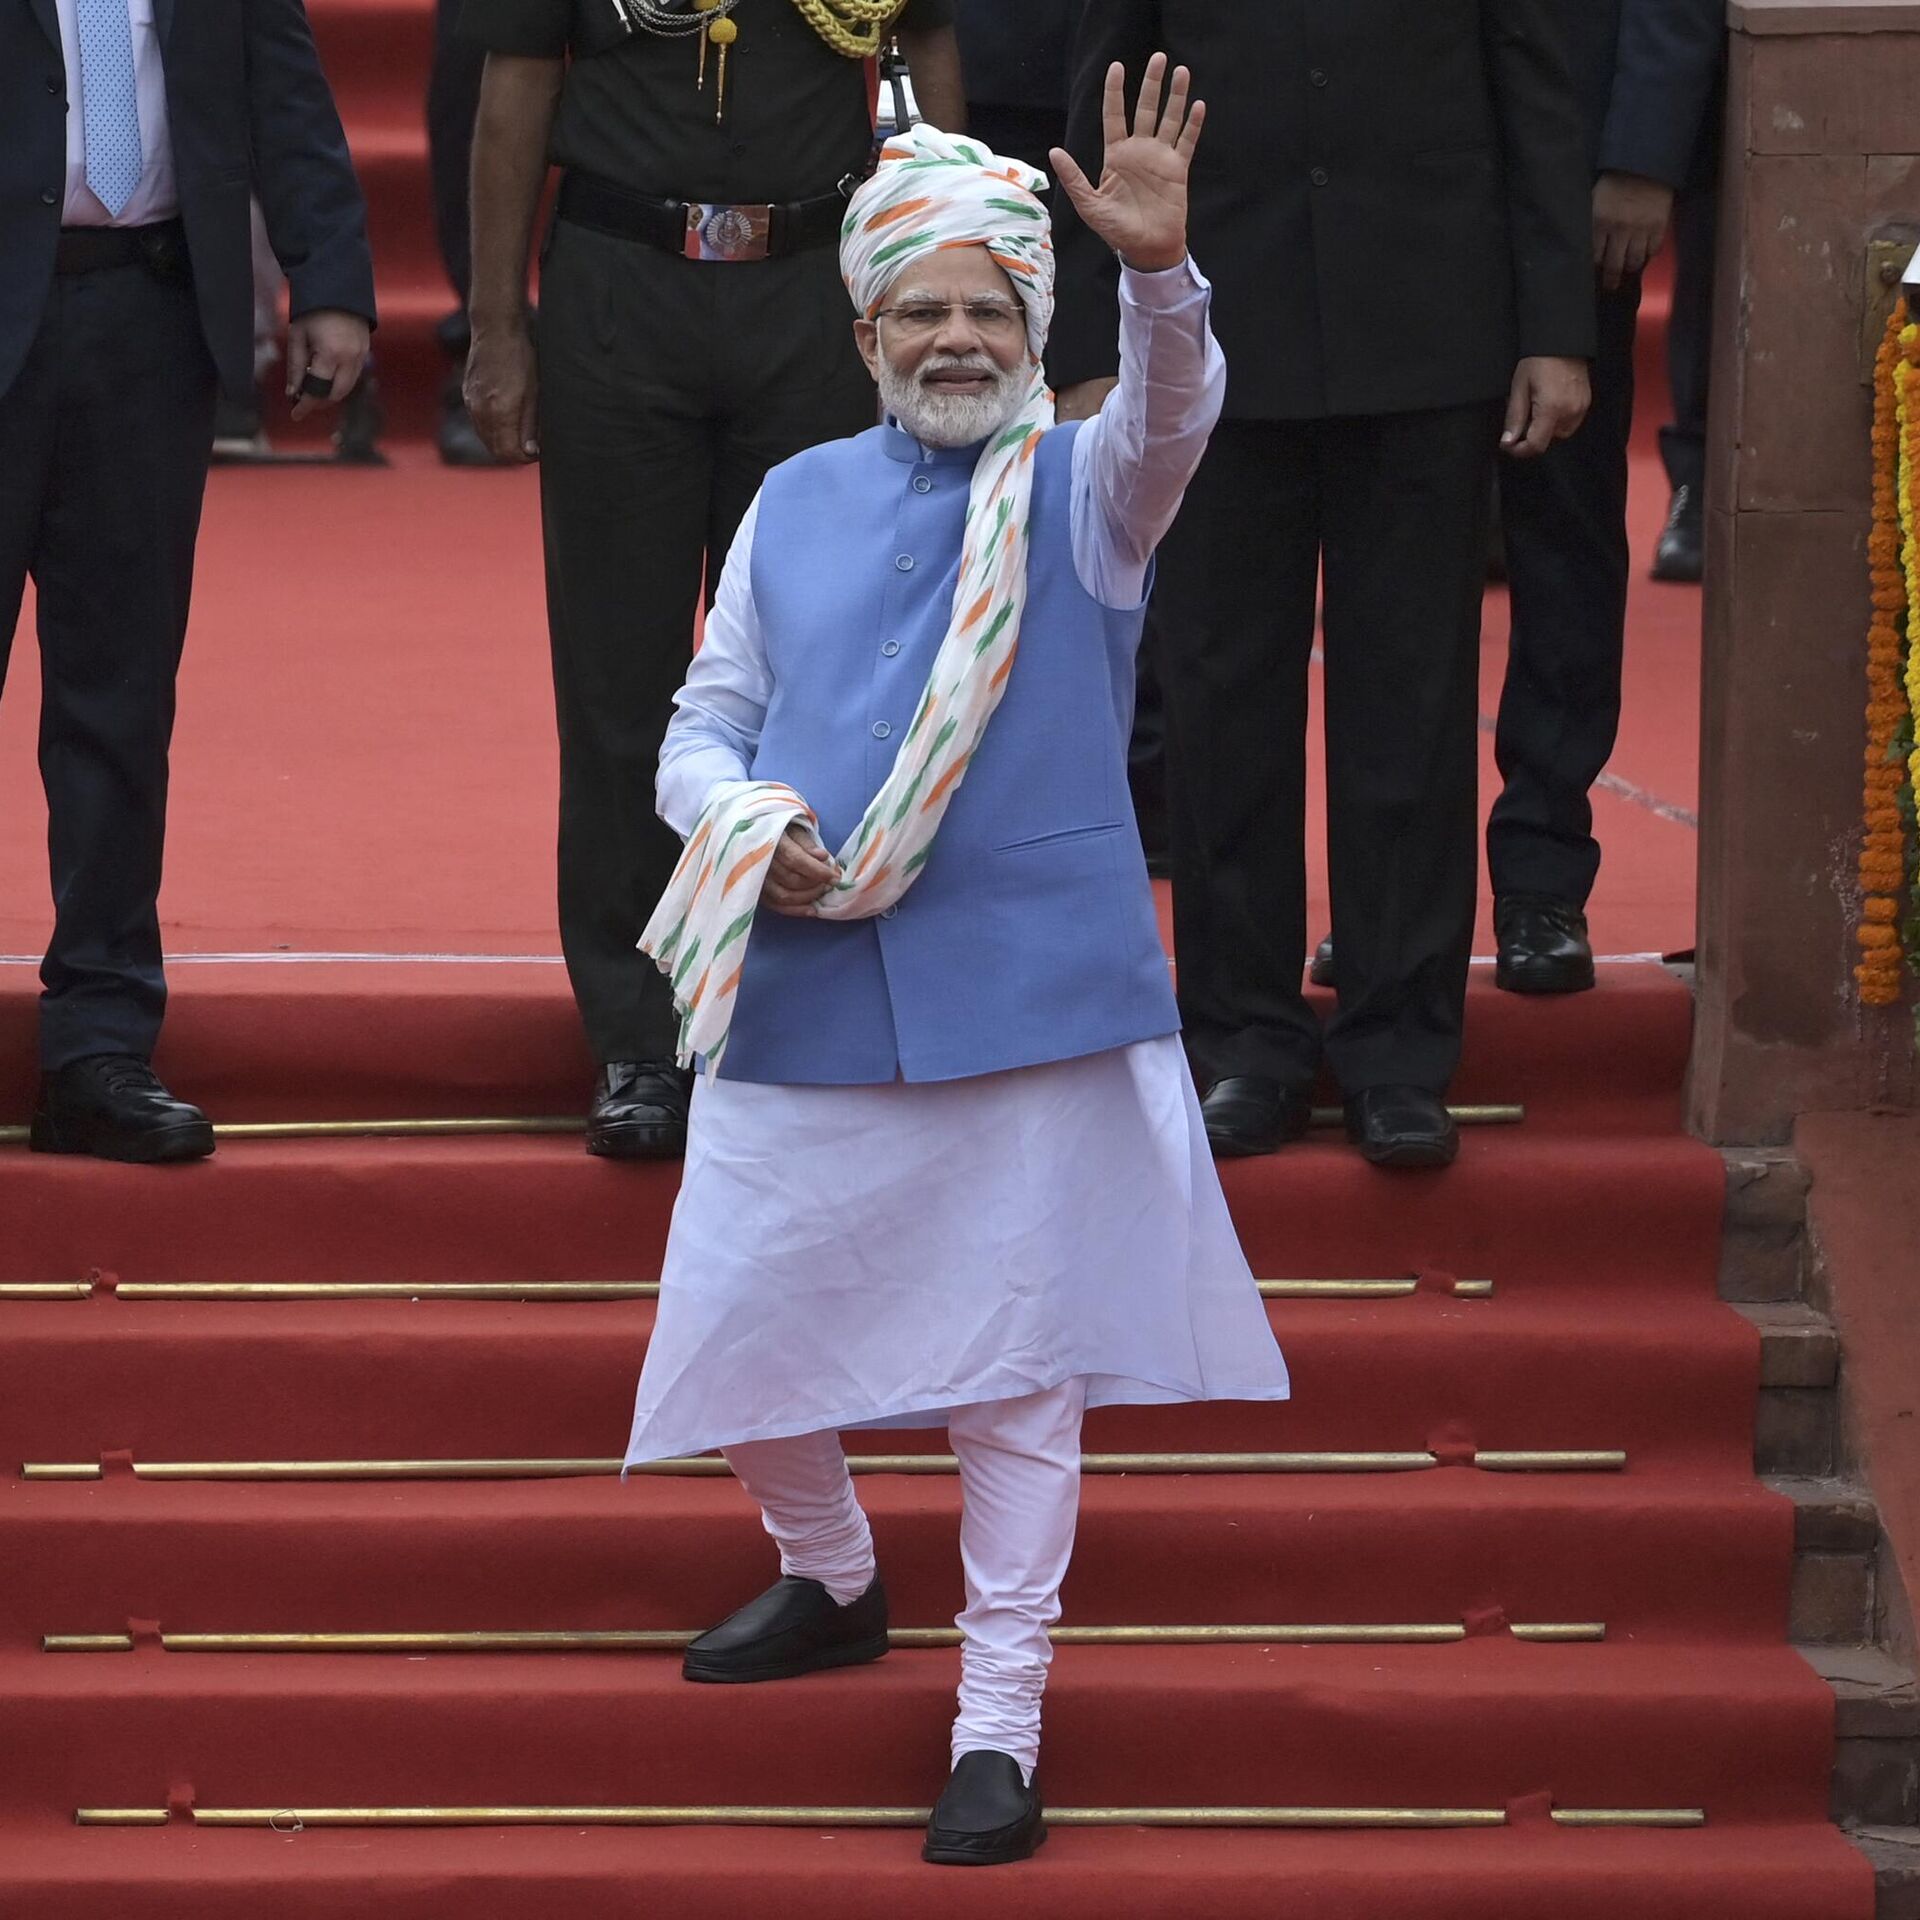 King of India PM Narendra Modi in royal Indian dress. #aiart #midjourneyart  #midjourney #artificialintelligence #indiankurta | Instagram